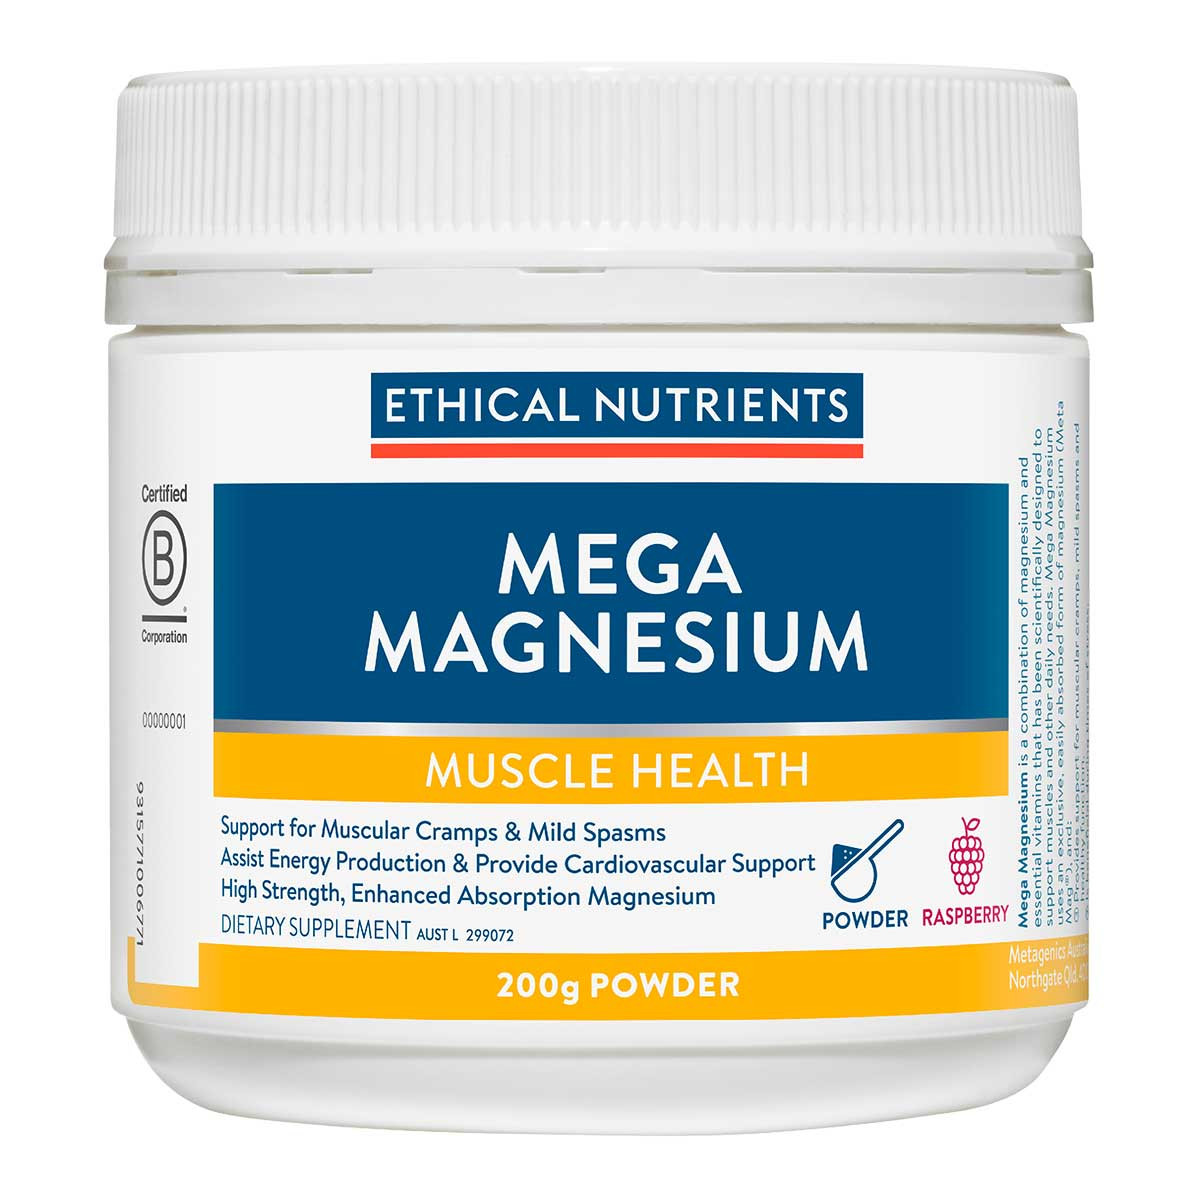 Ethical Nutrients – Mega Magnesium Powder Raspberry